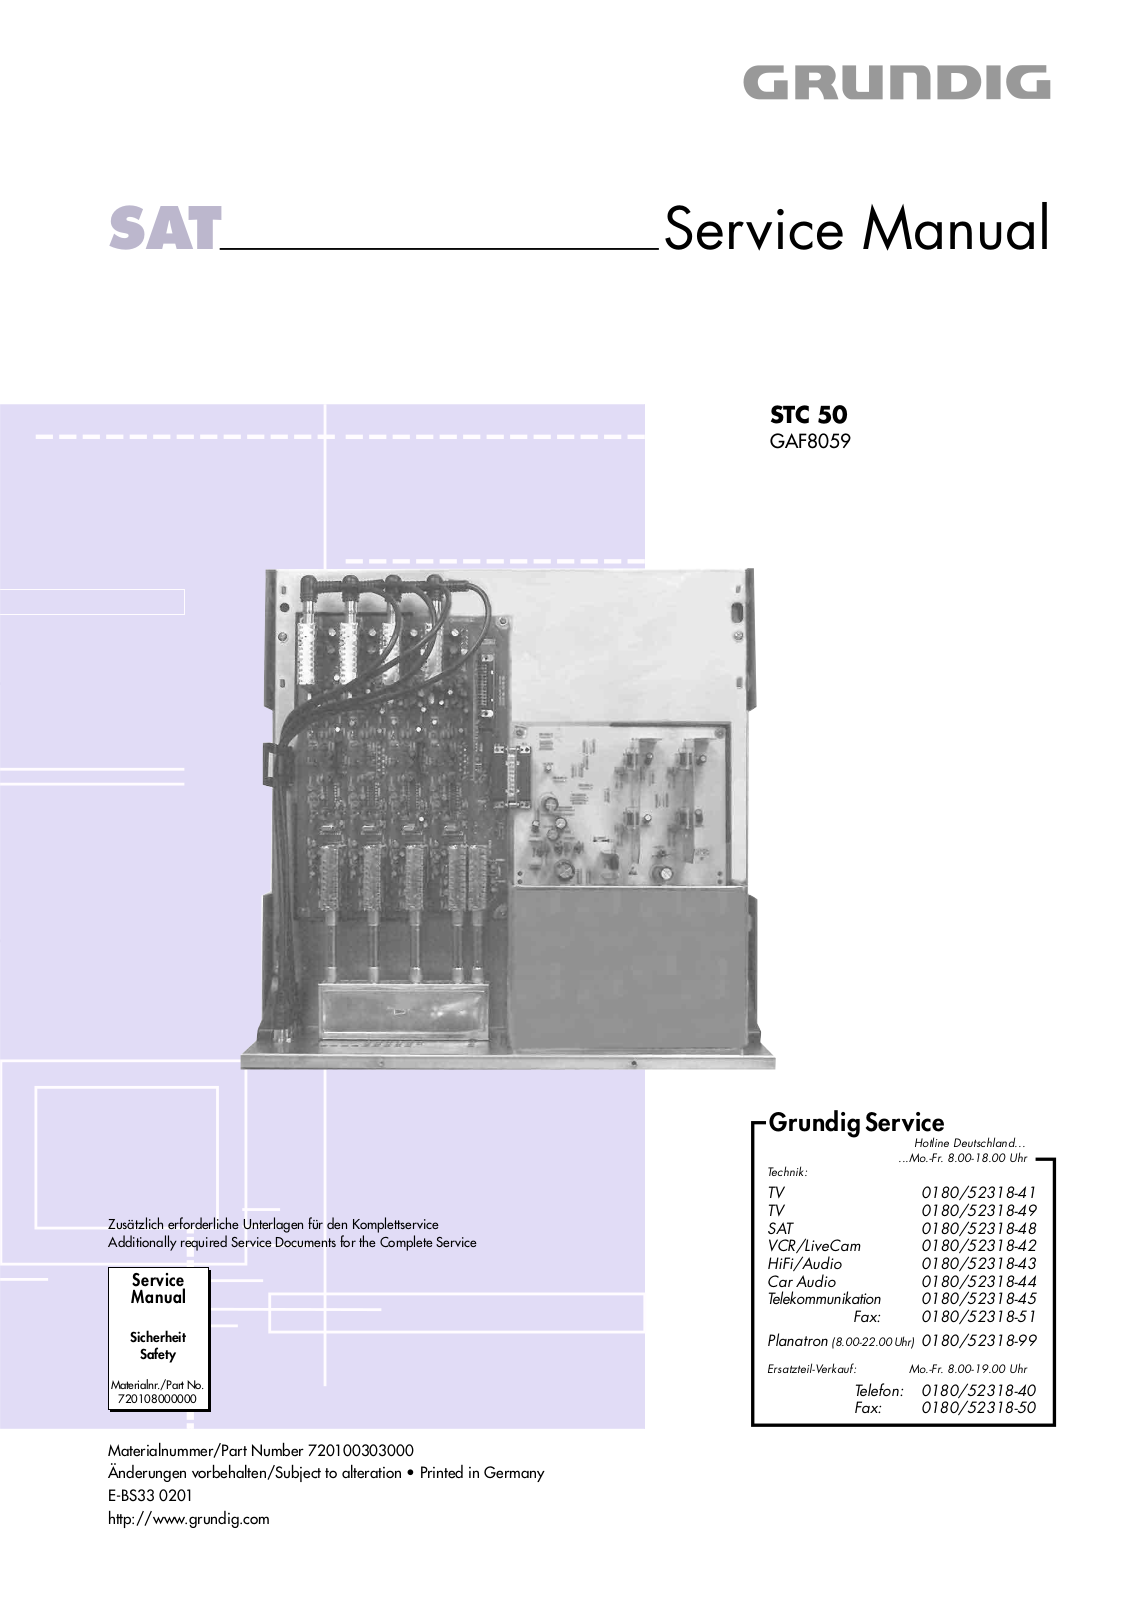 Grundig STC 50 Service Manual